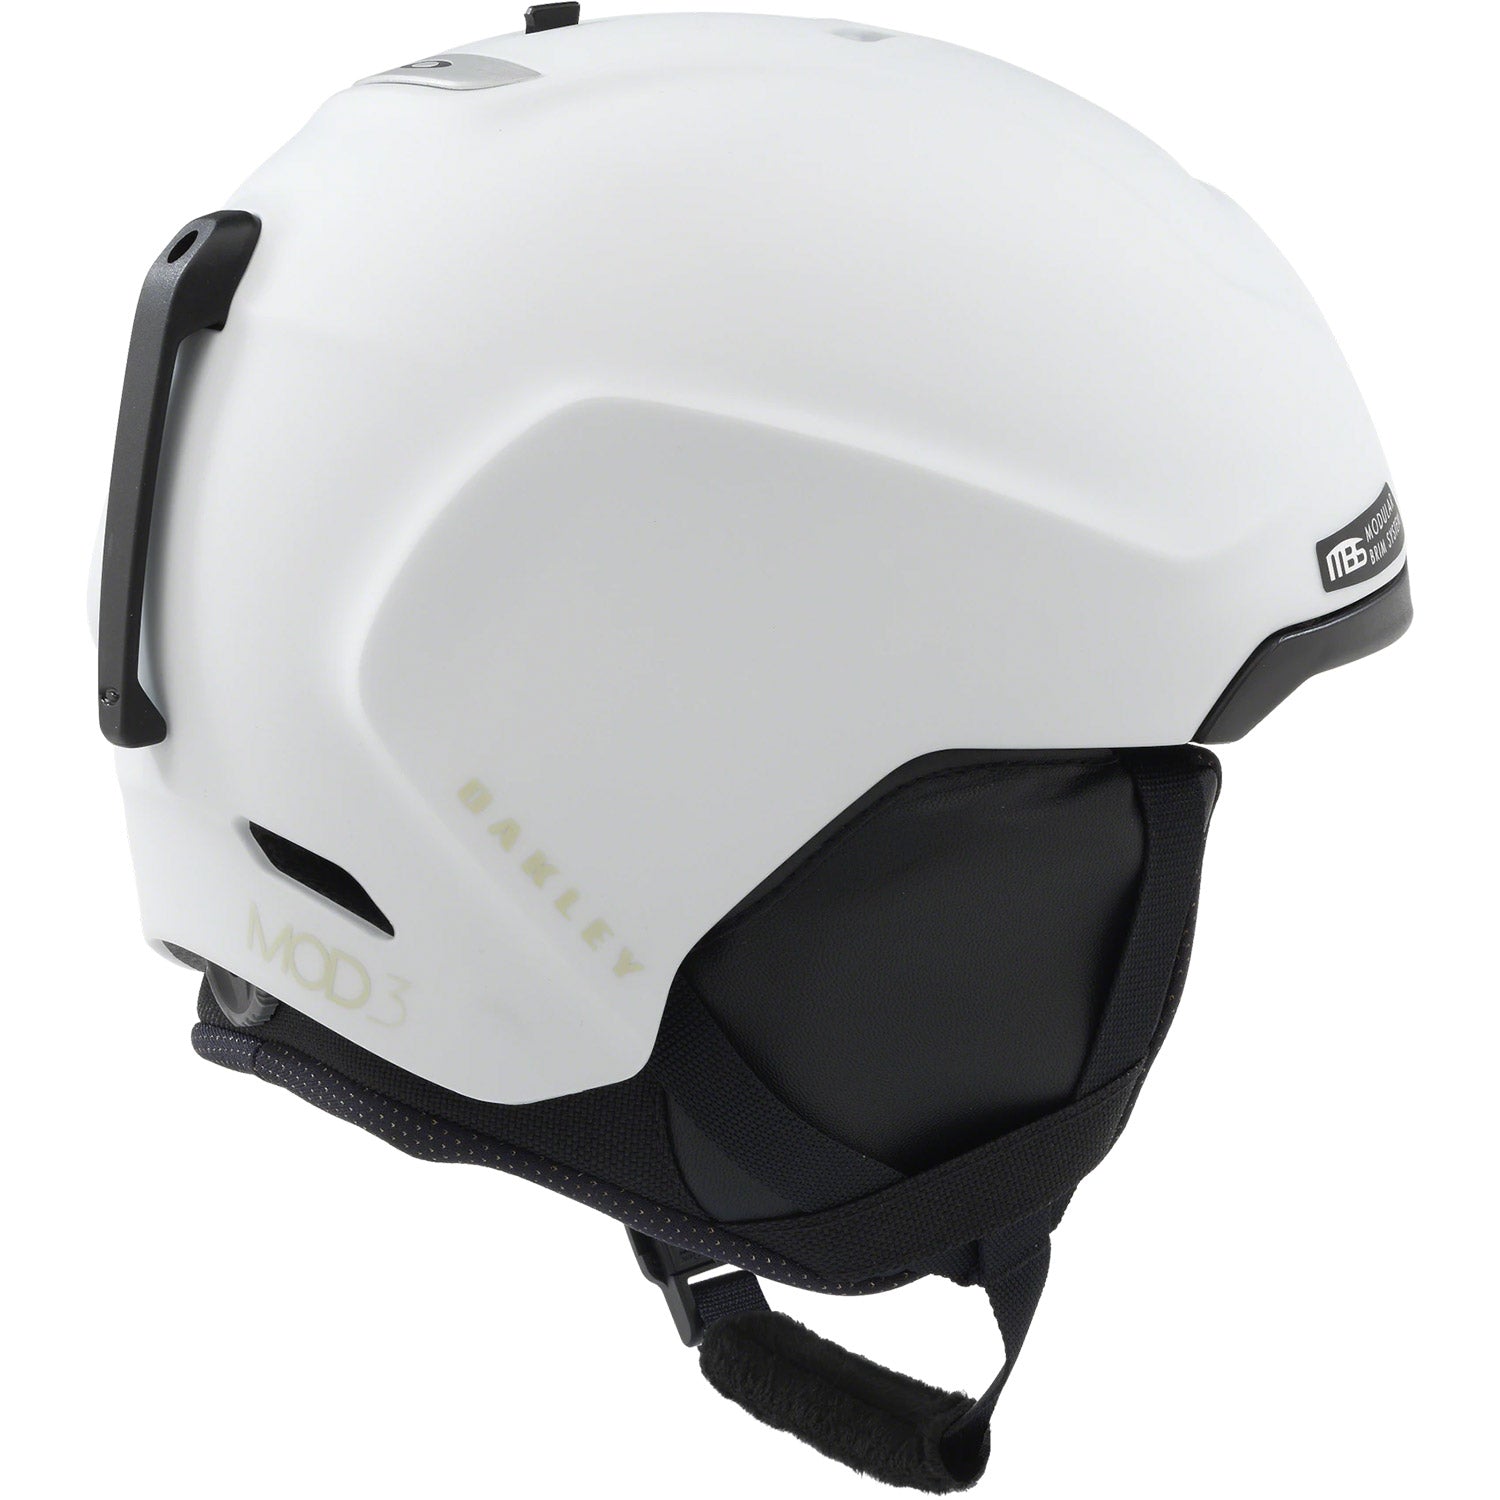 Mod3 Mips Snow Helmet